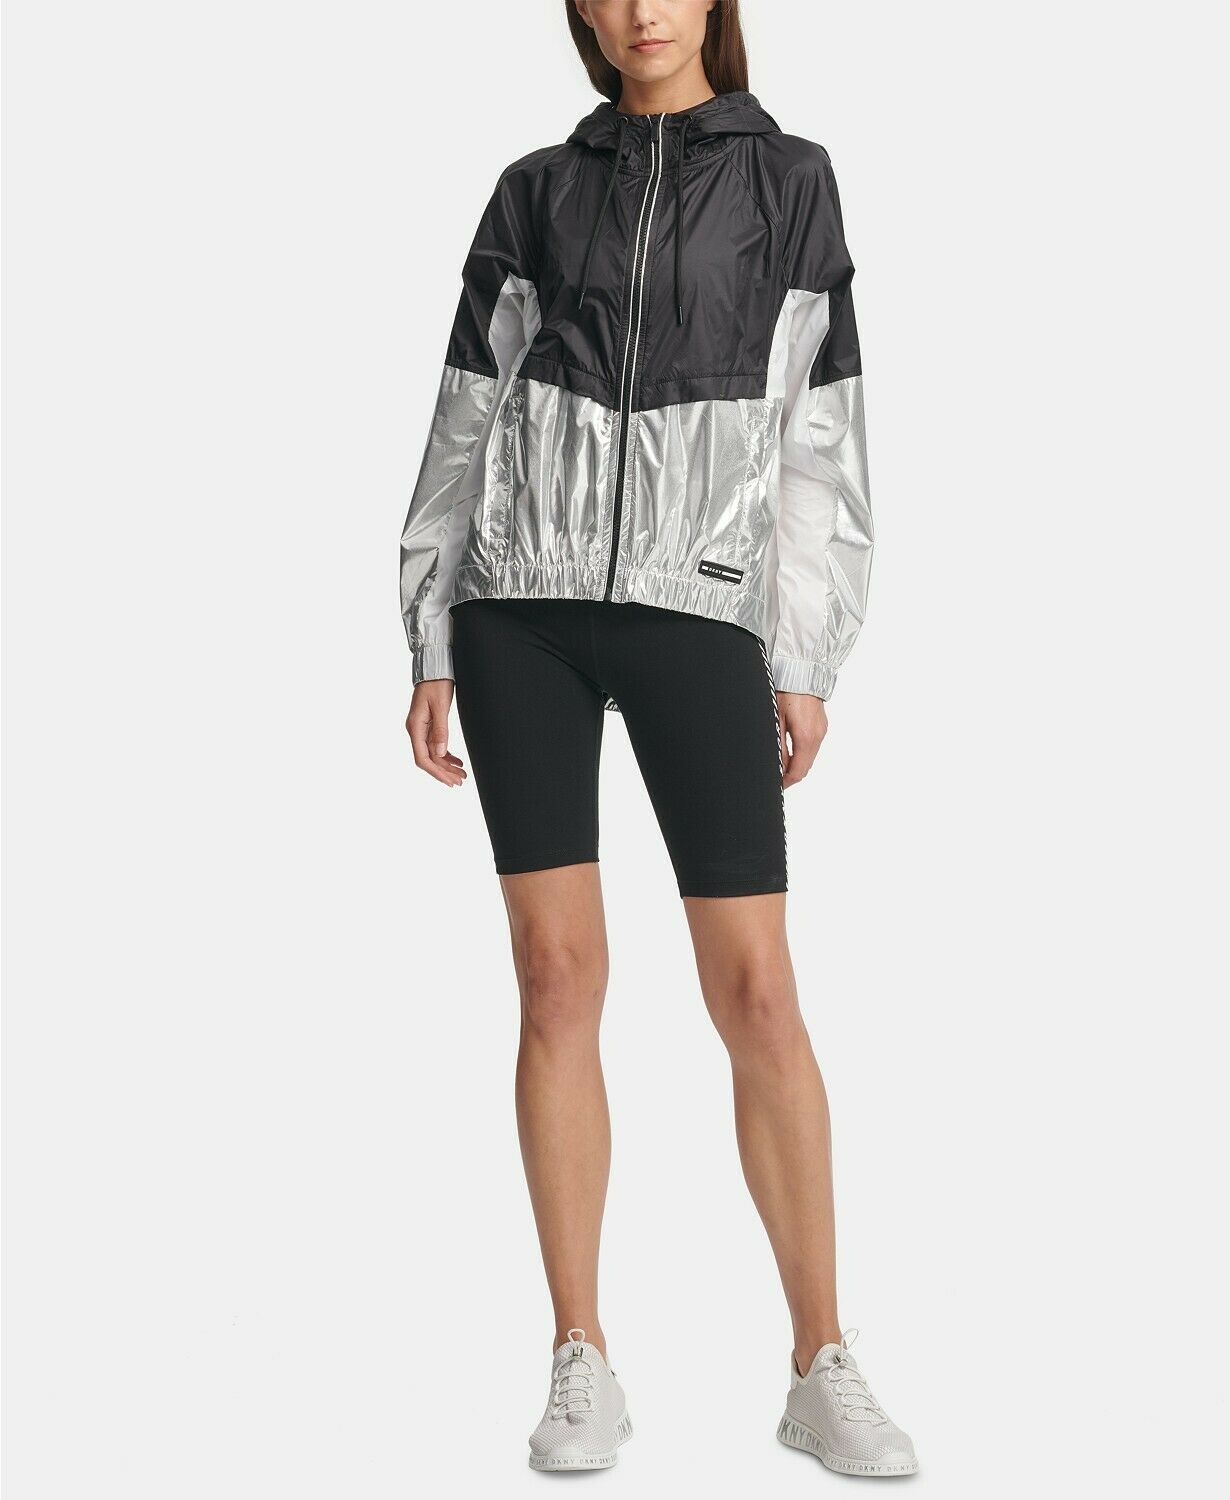 DKNY Sport Women's Colorblocked Hooded Lightweight Jacket, M - Activewear Jackets